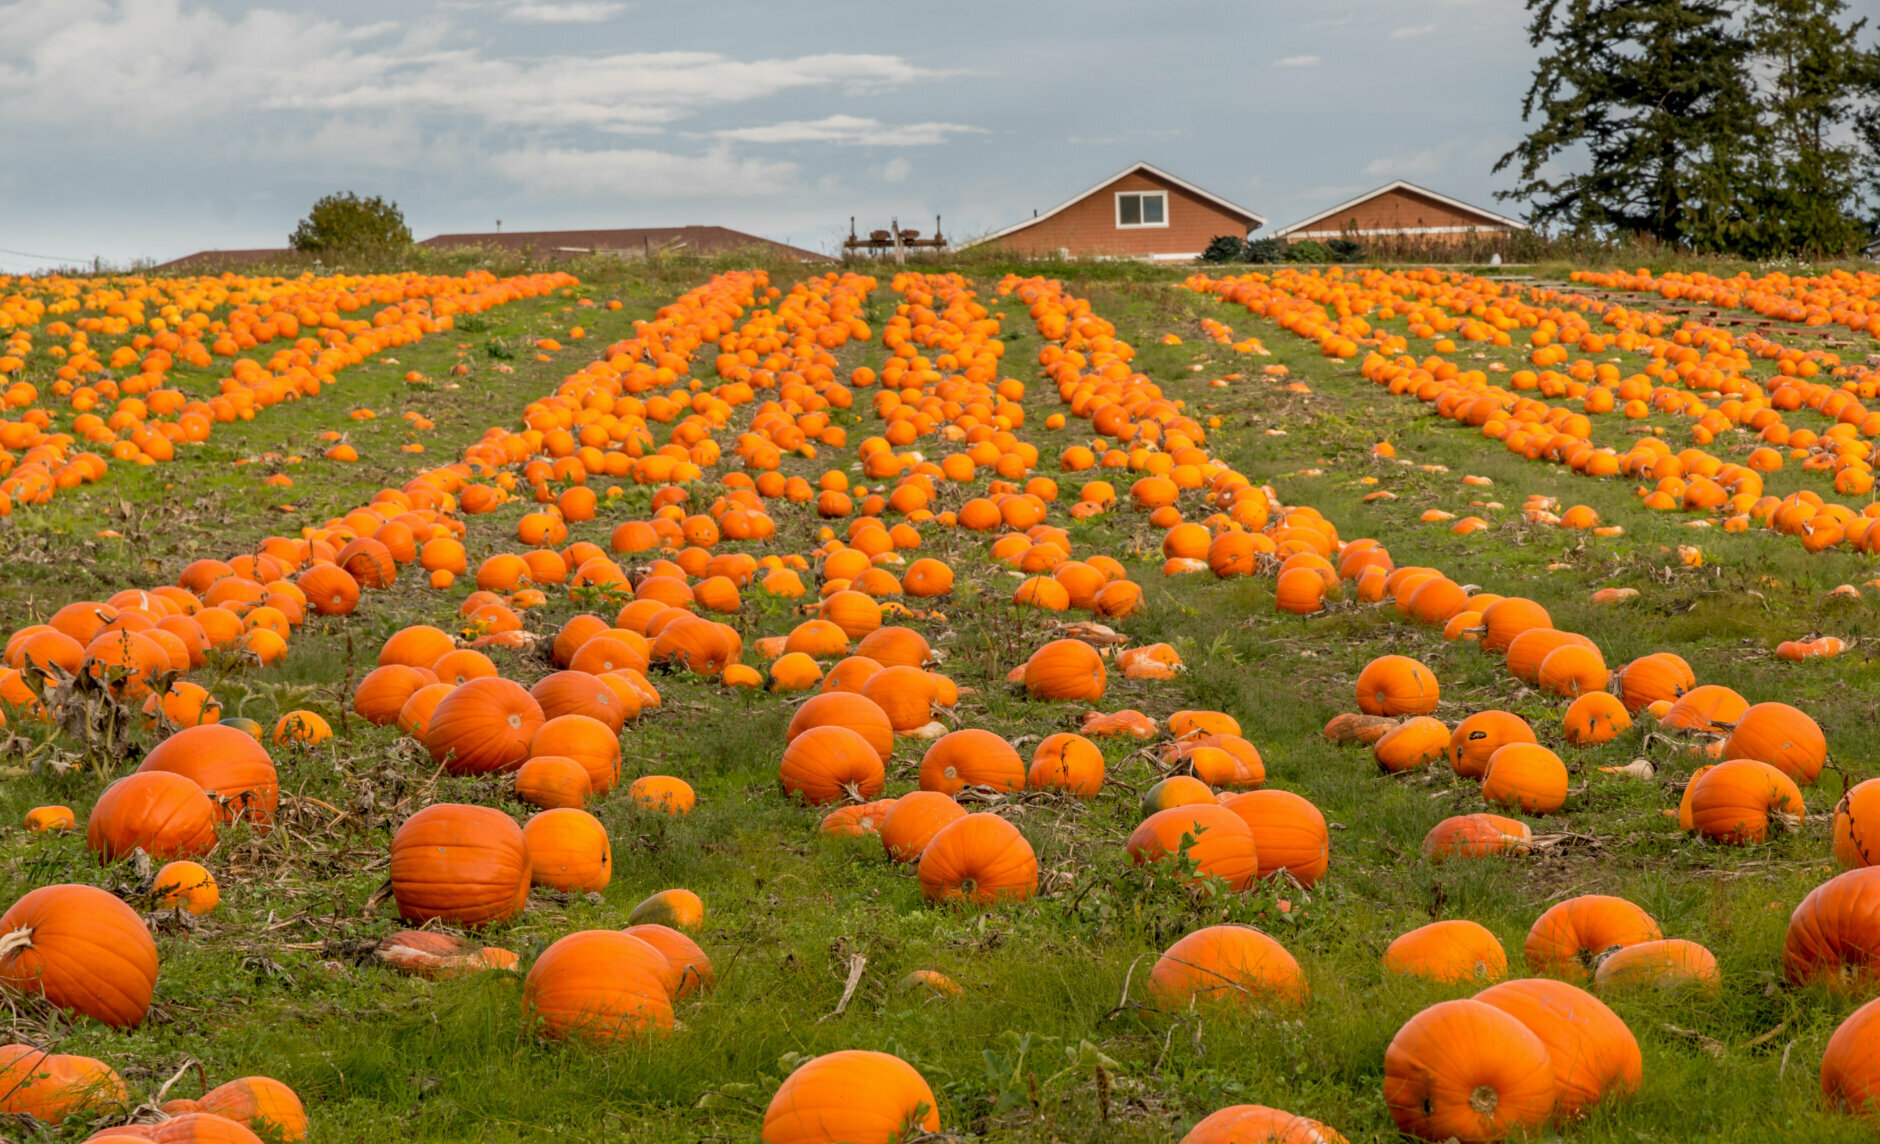 Organic pumpkins ready for harvest.